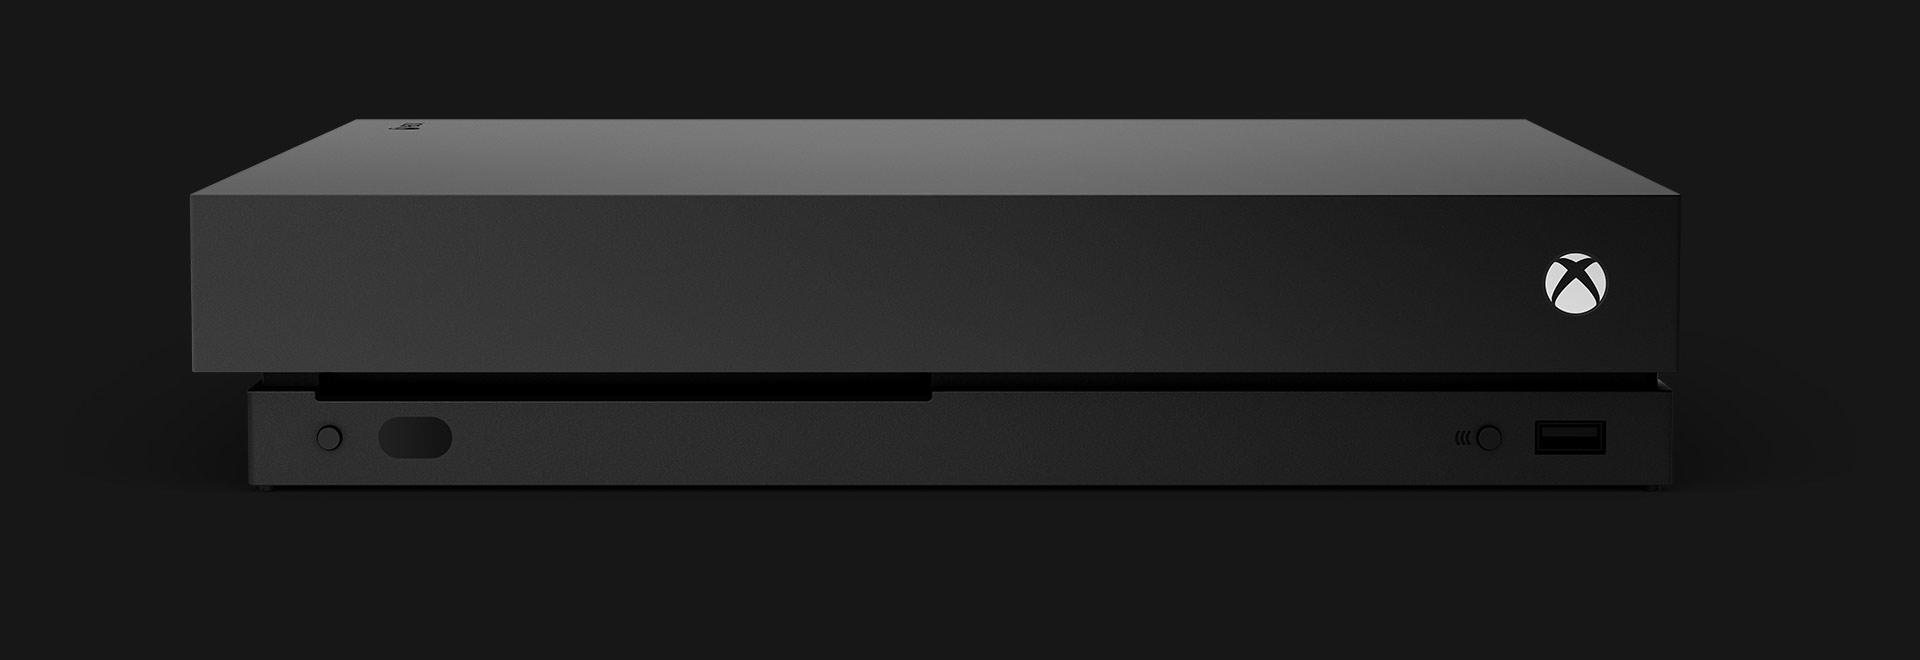 En Xbox One X-konsoll sett forfra.